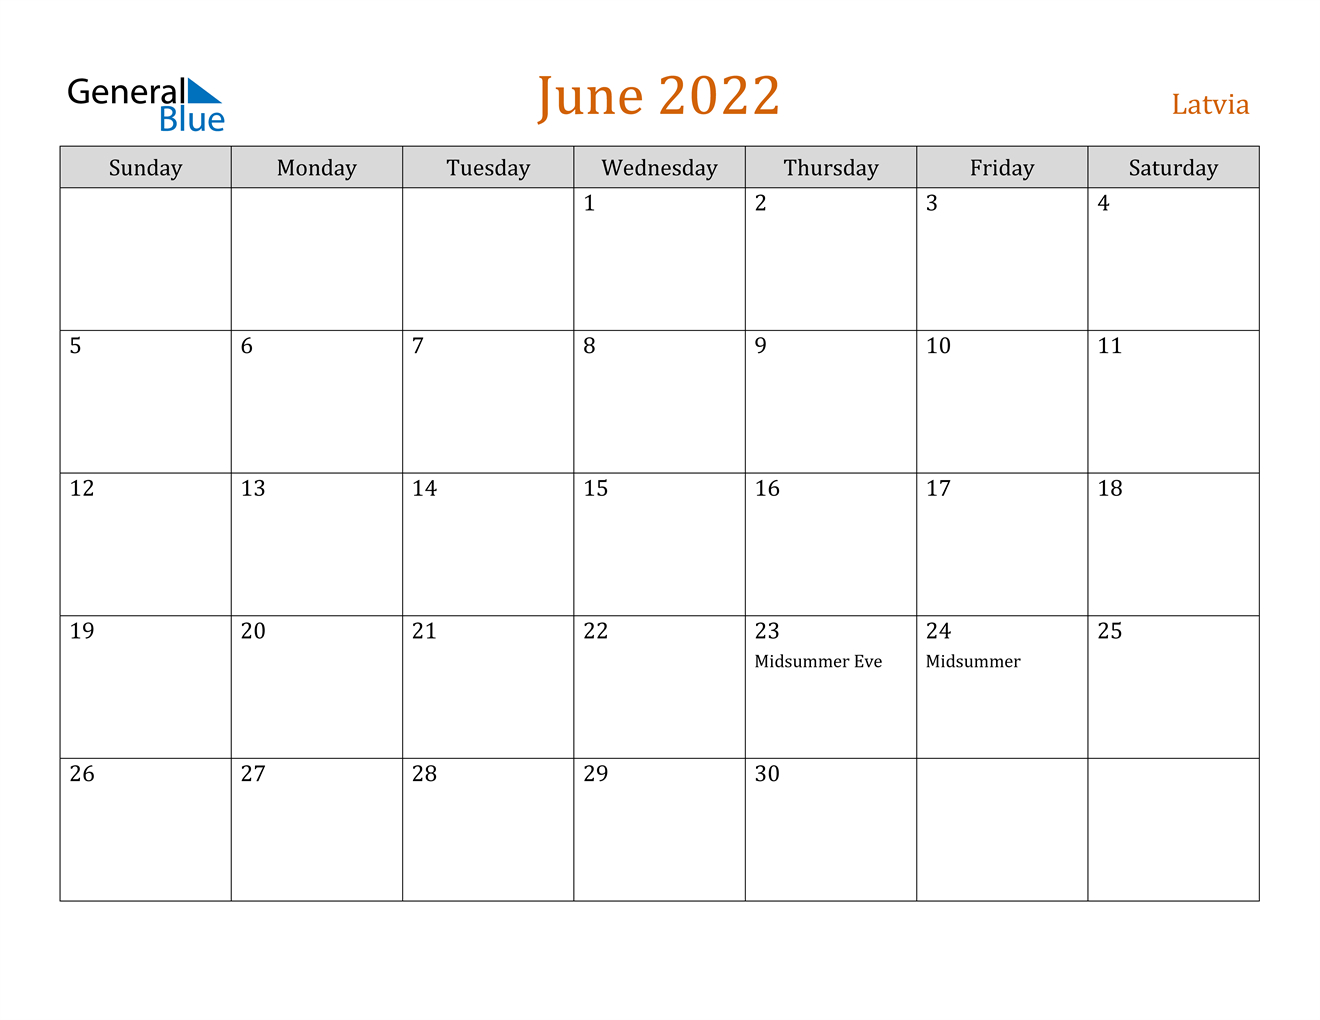 June 2022 Calendar - Latvia